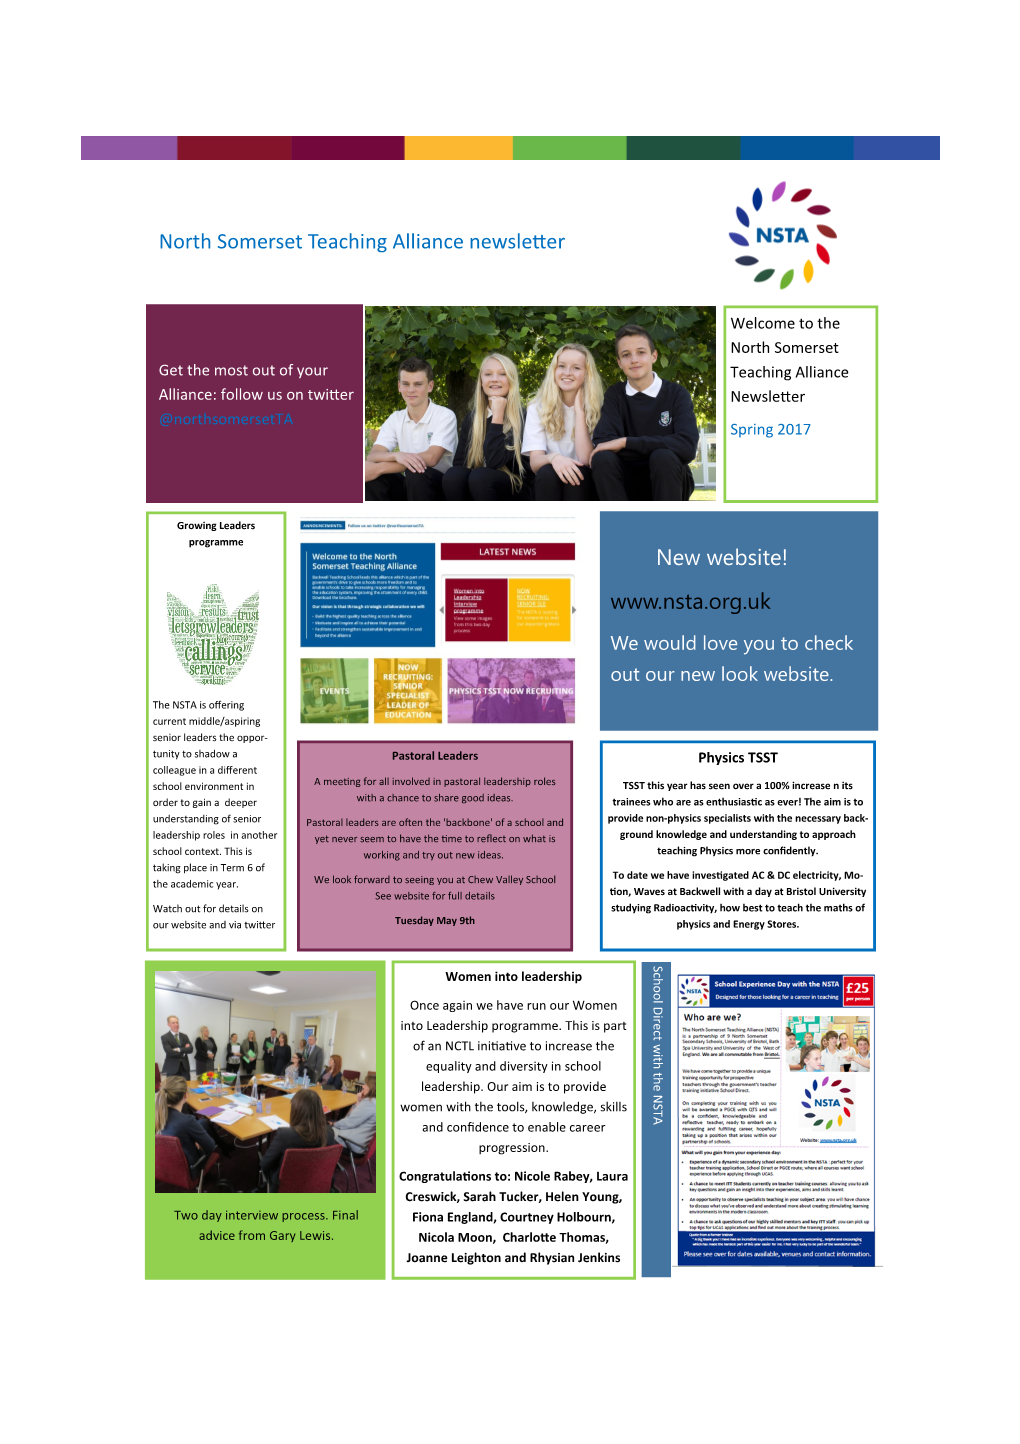 North Somerset Teaching Alliance Newsletter New Website!